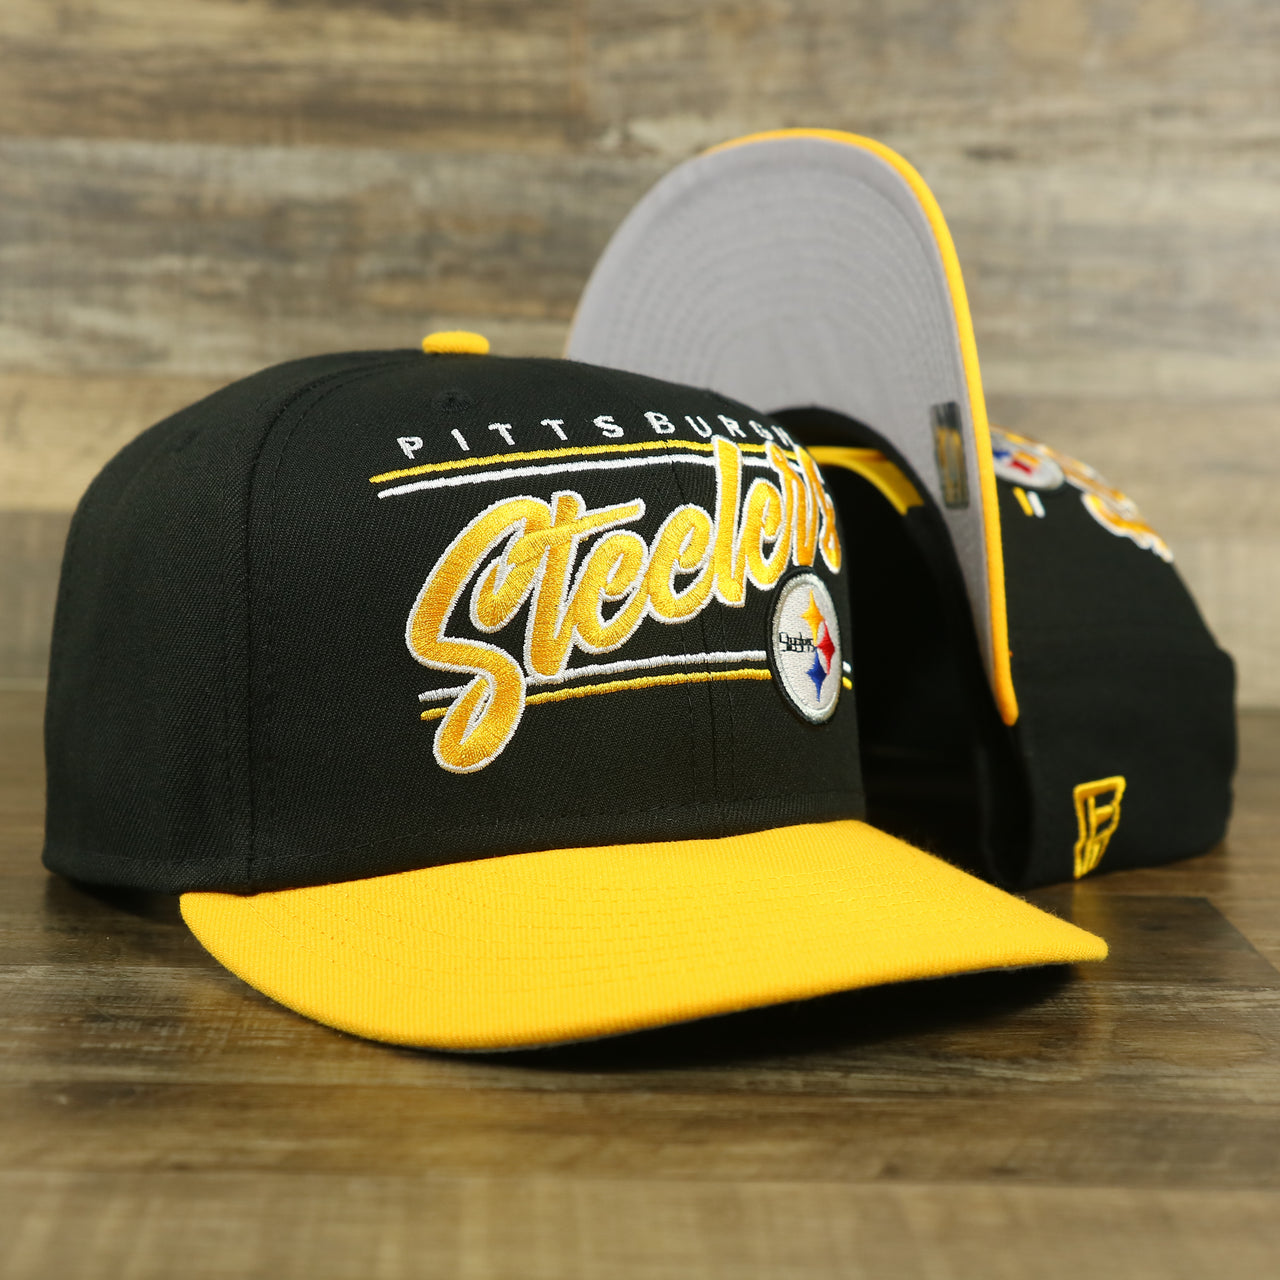 Pittsburgh Steelers "Team Script" College Bar 9Fifty Snapback Hat | Black/Yellow Steelers 950 Snap Cap